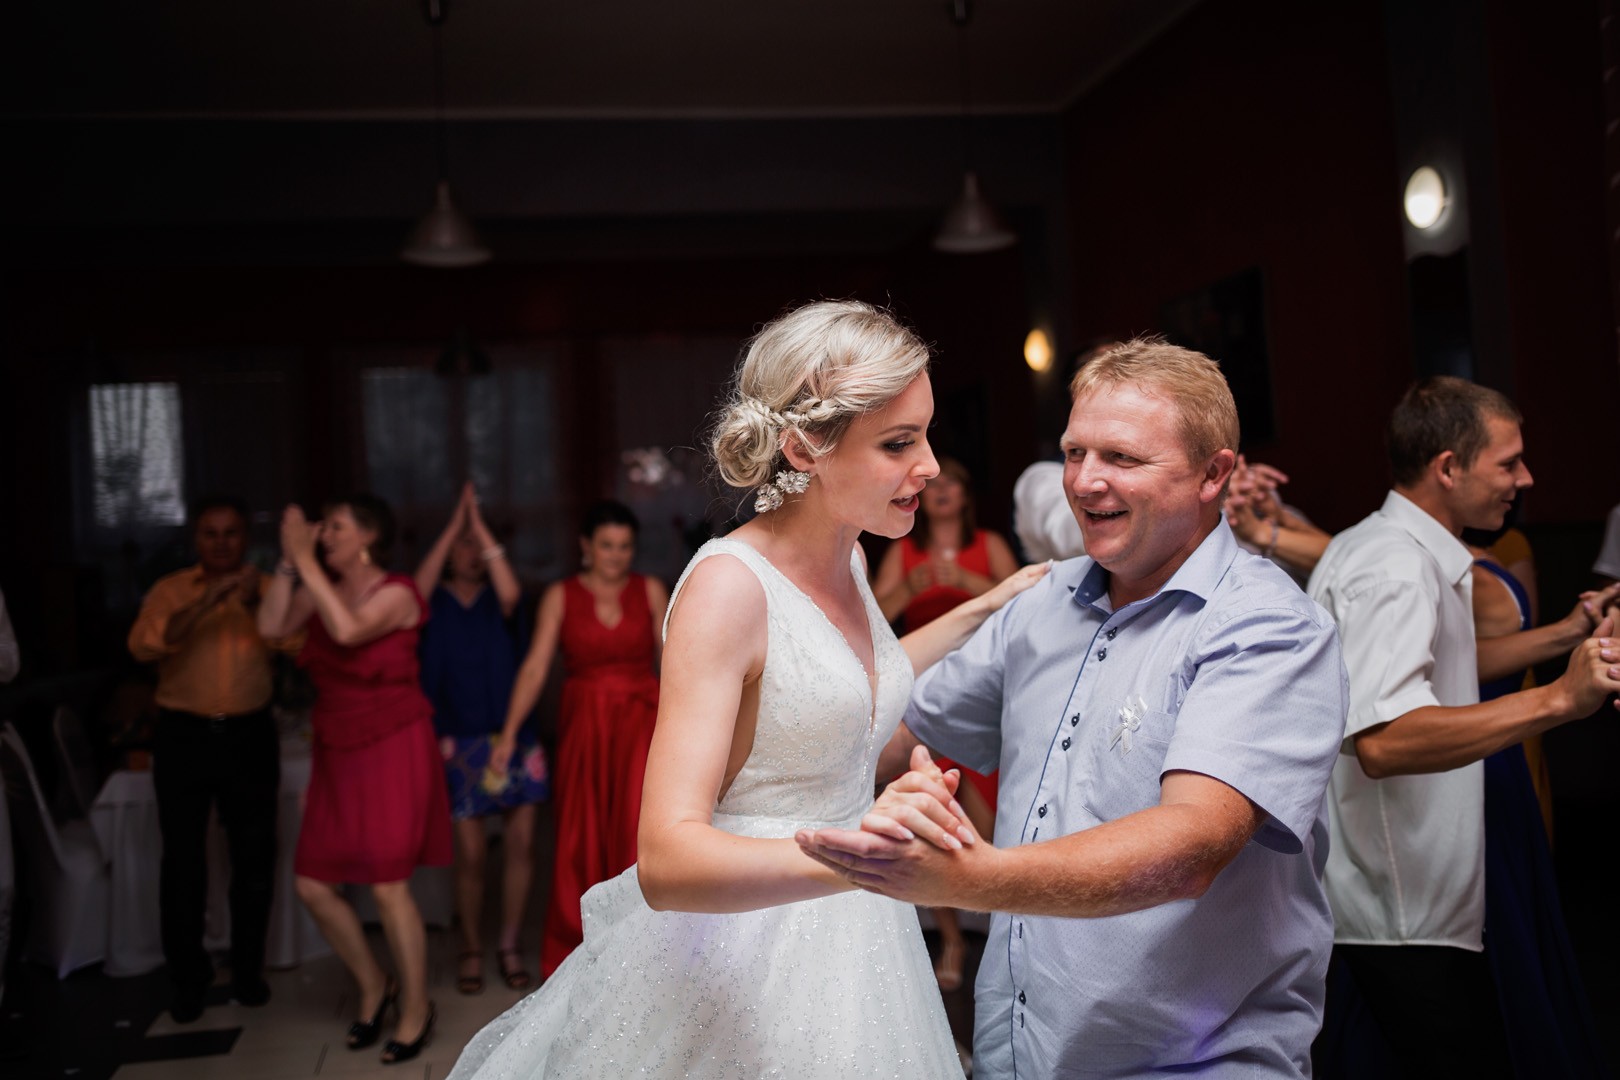 Wedding photos from the wedding day of Miška and Stanka. - 0706.jpg